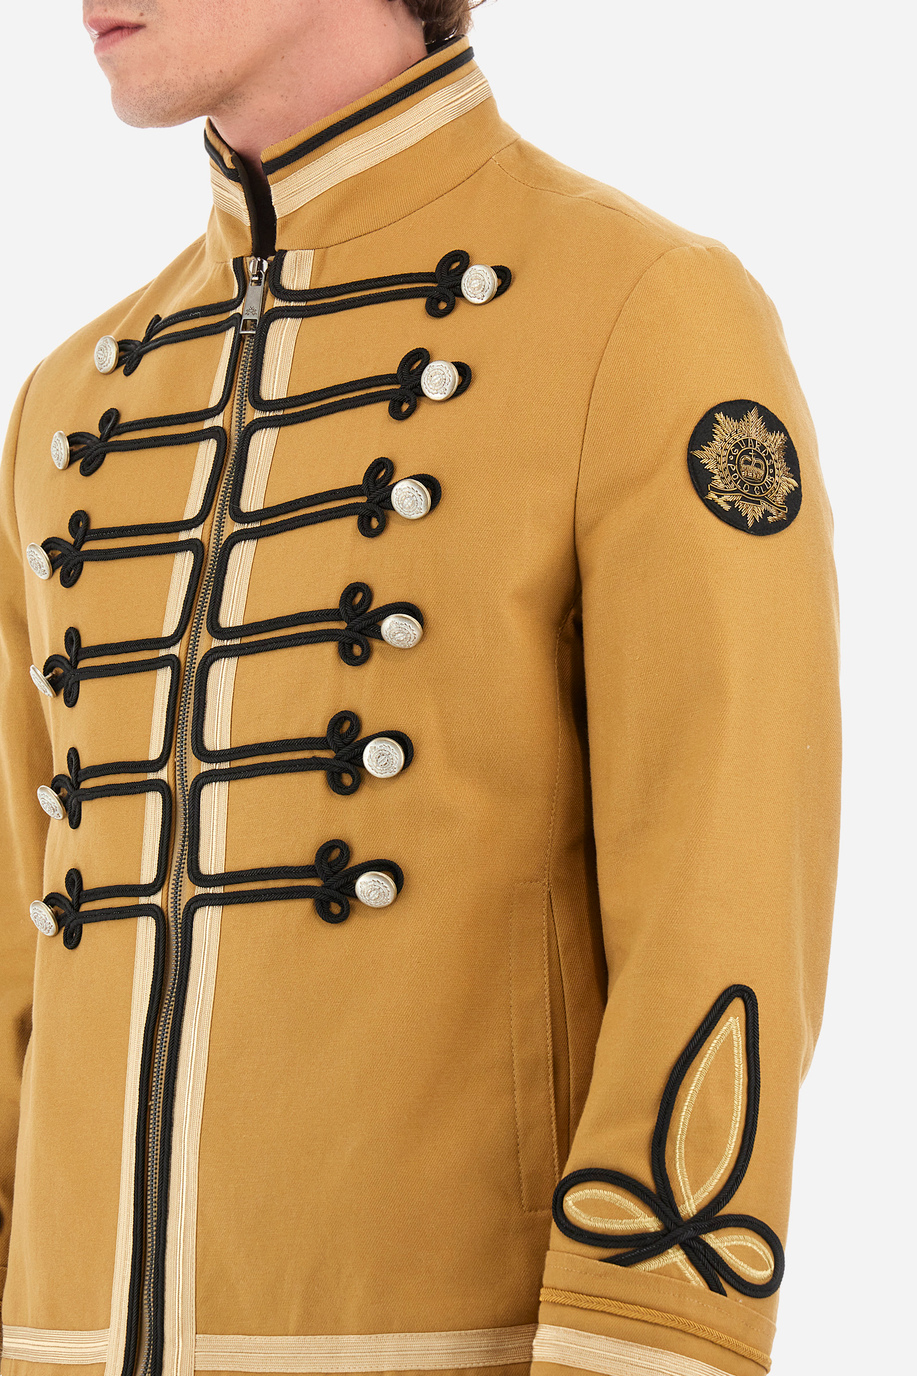 Regular-fit Guards jacket in cotton - Yefim - Spring looks for him | La Martina - Official Online Shop